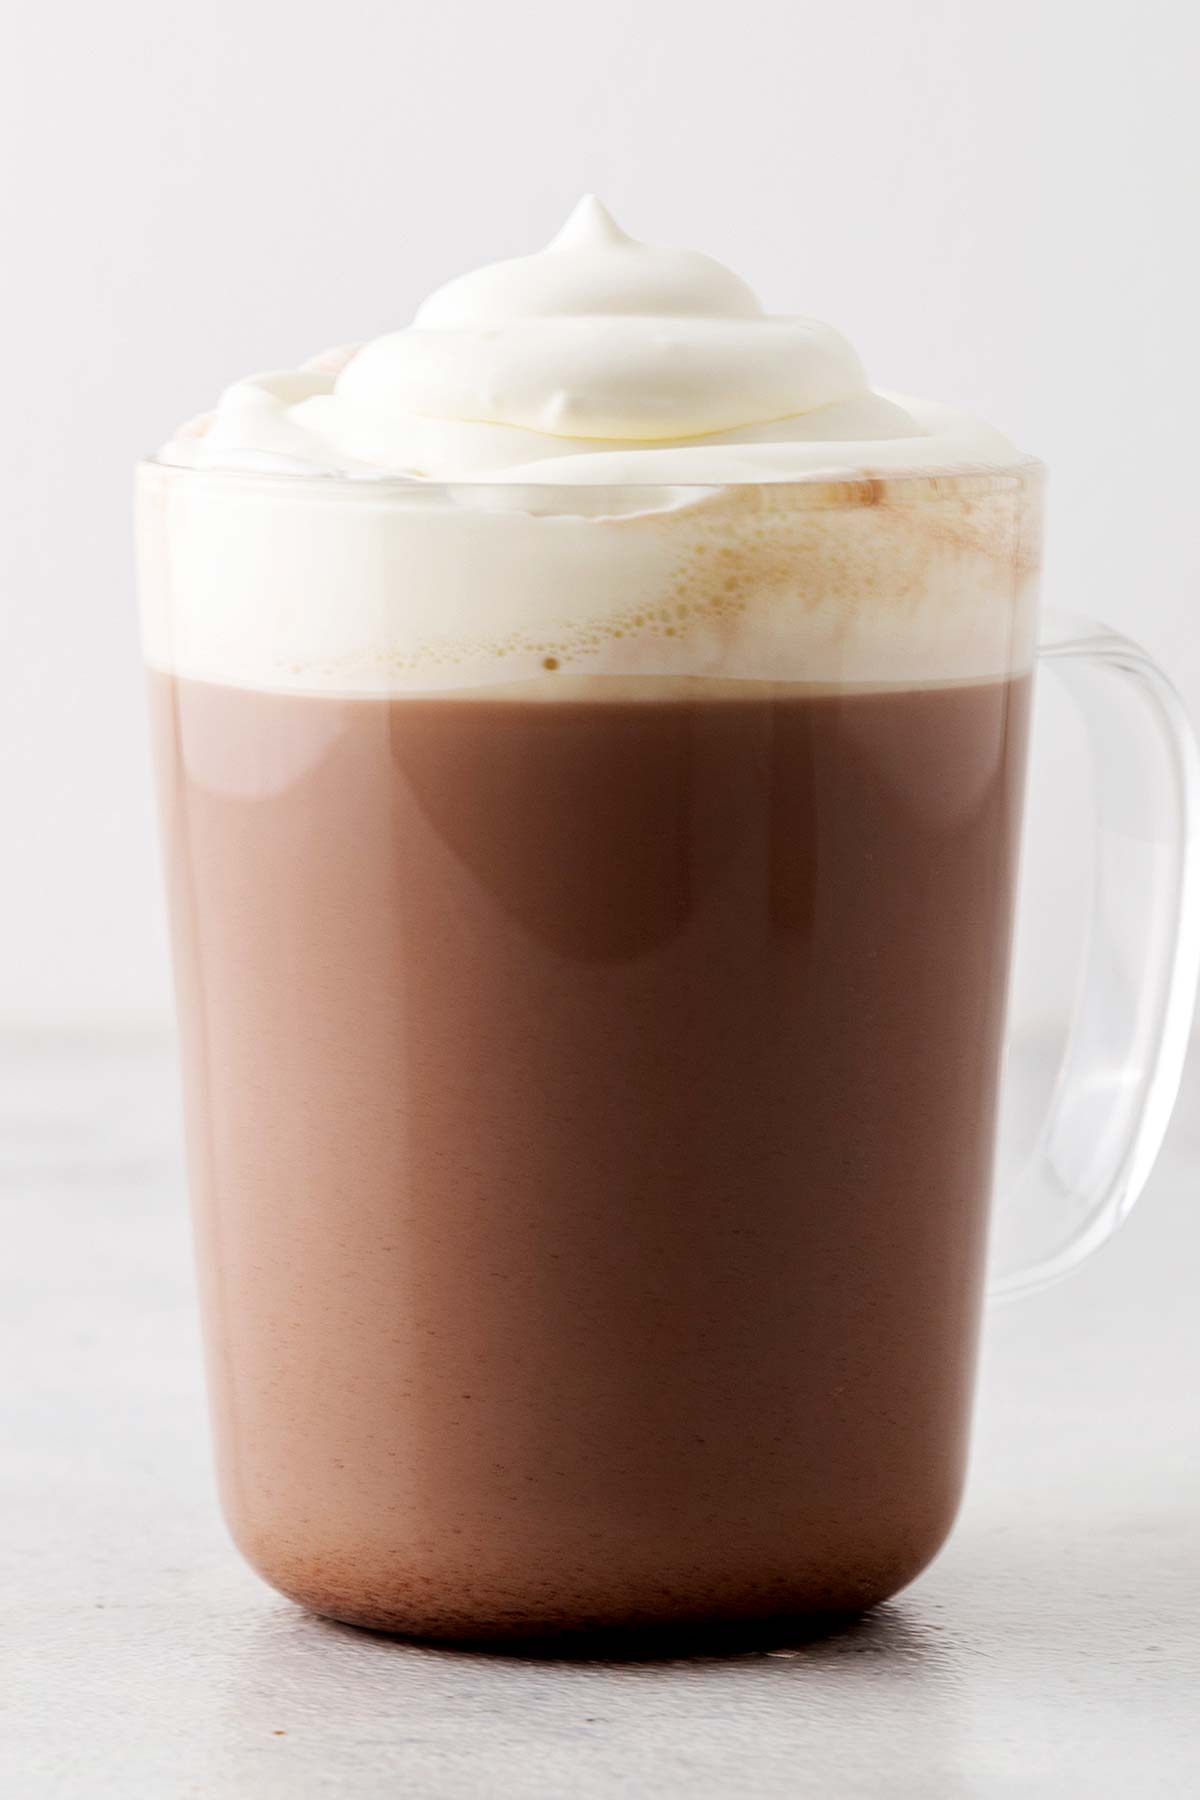 Peppermint hot chocolate in a glass mug.